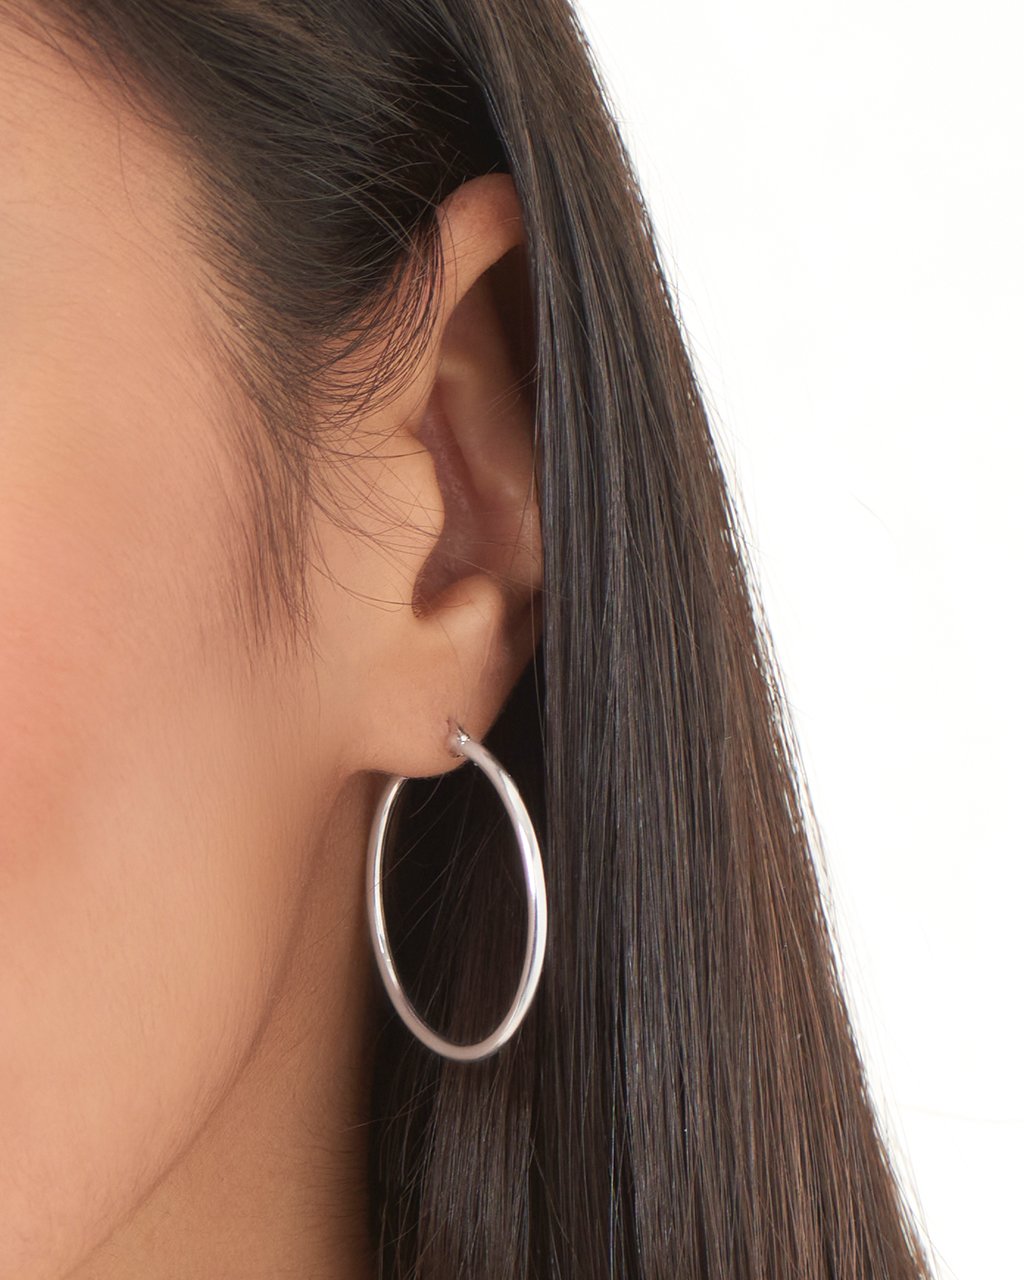 circle earrings silver